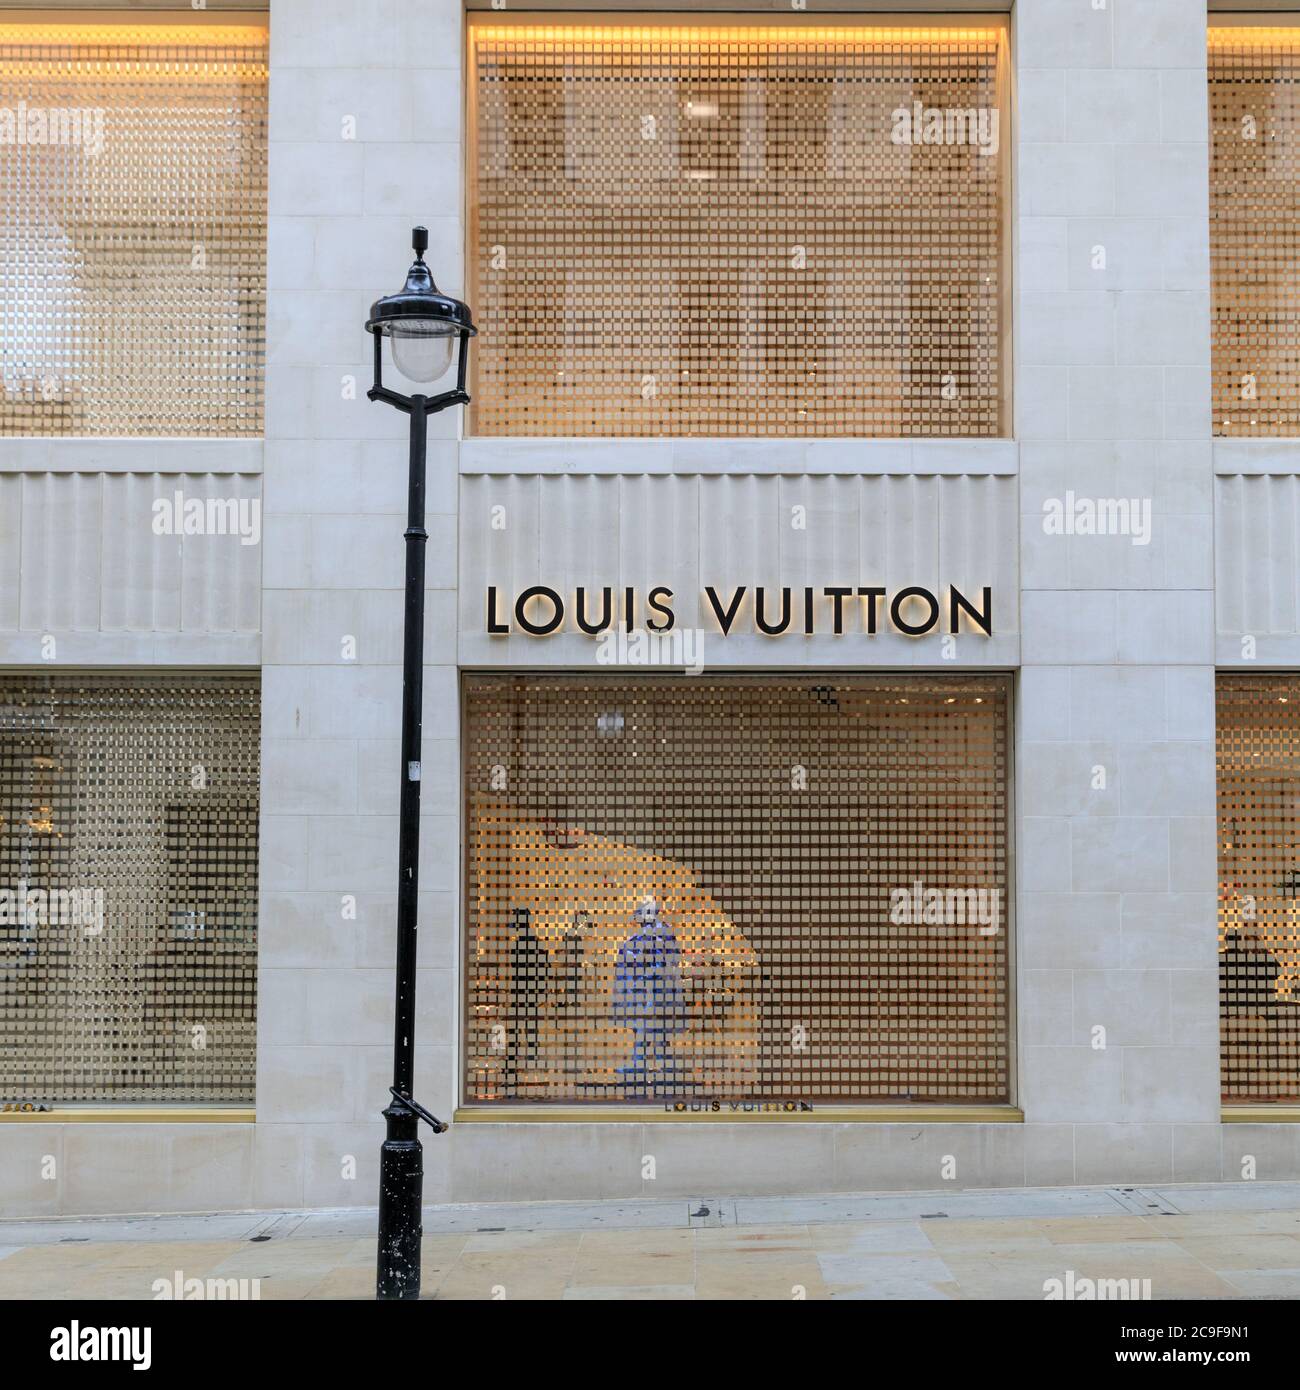 Louis Vuitton luxury brand flagship store exterior in New Bond